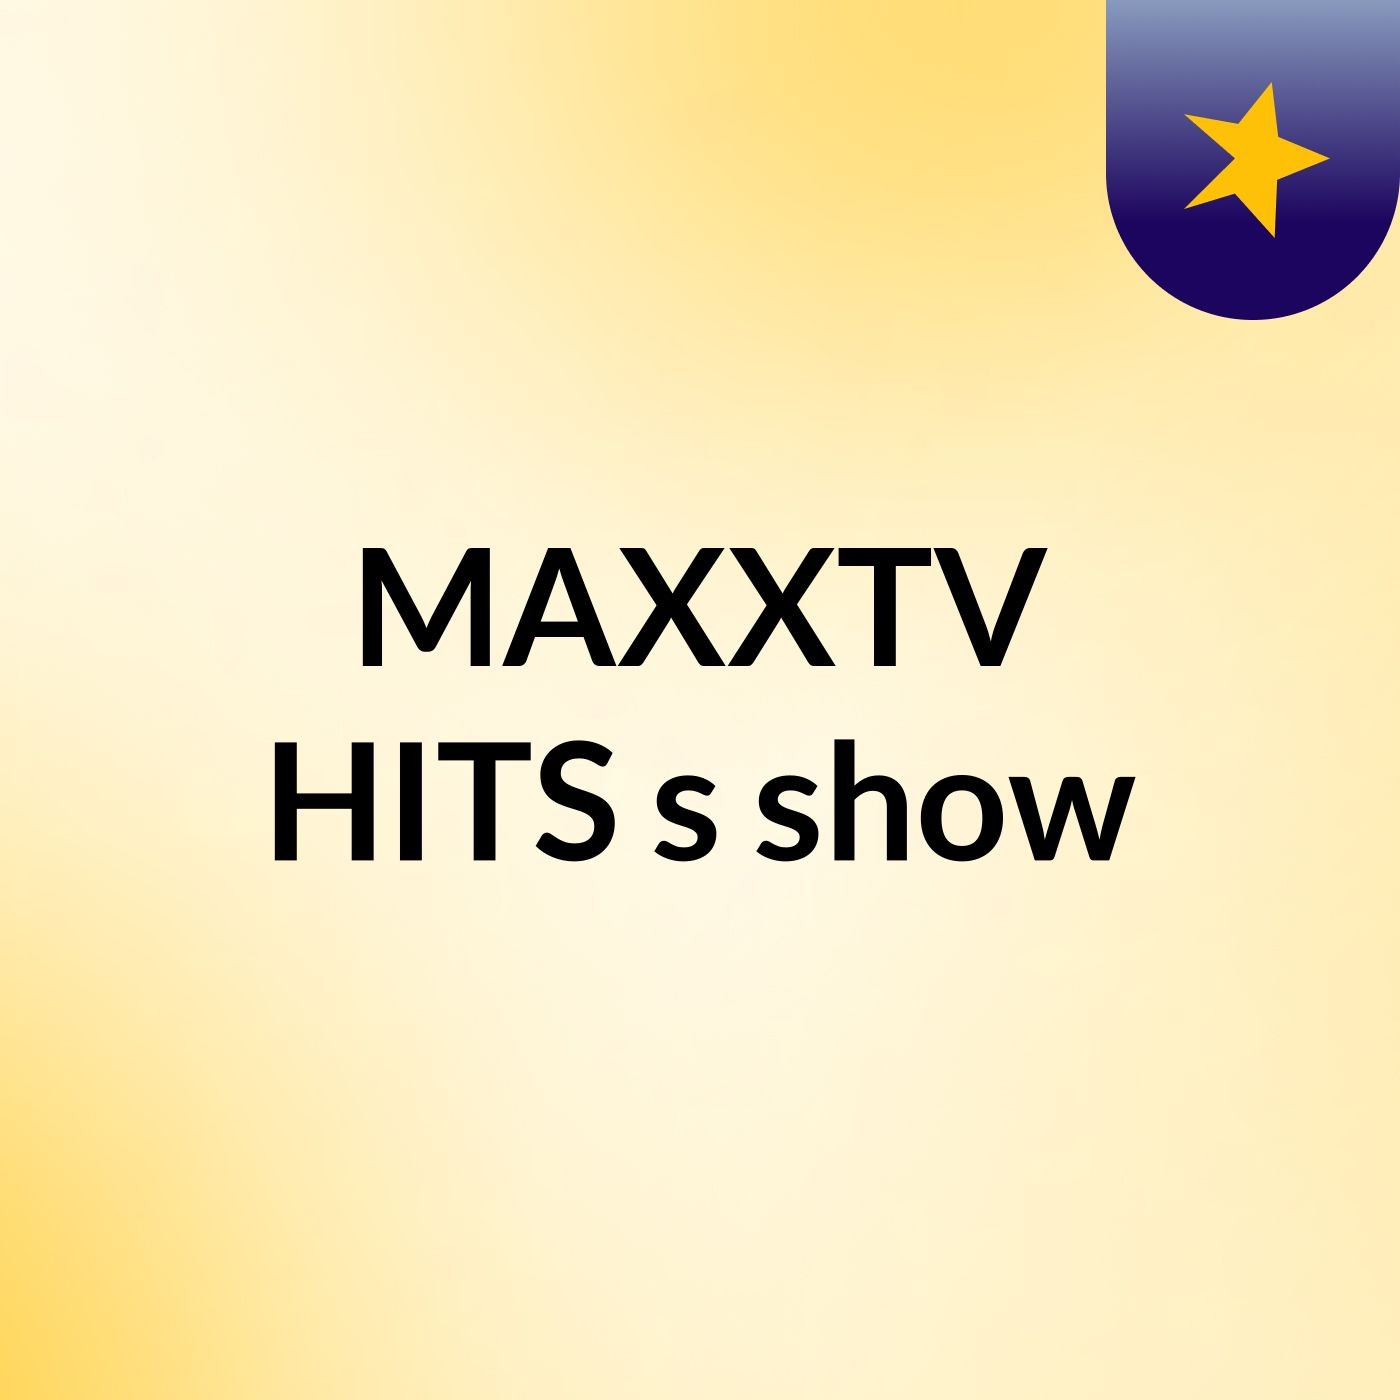 MAXXTV HITS's show